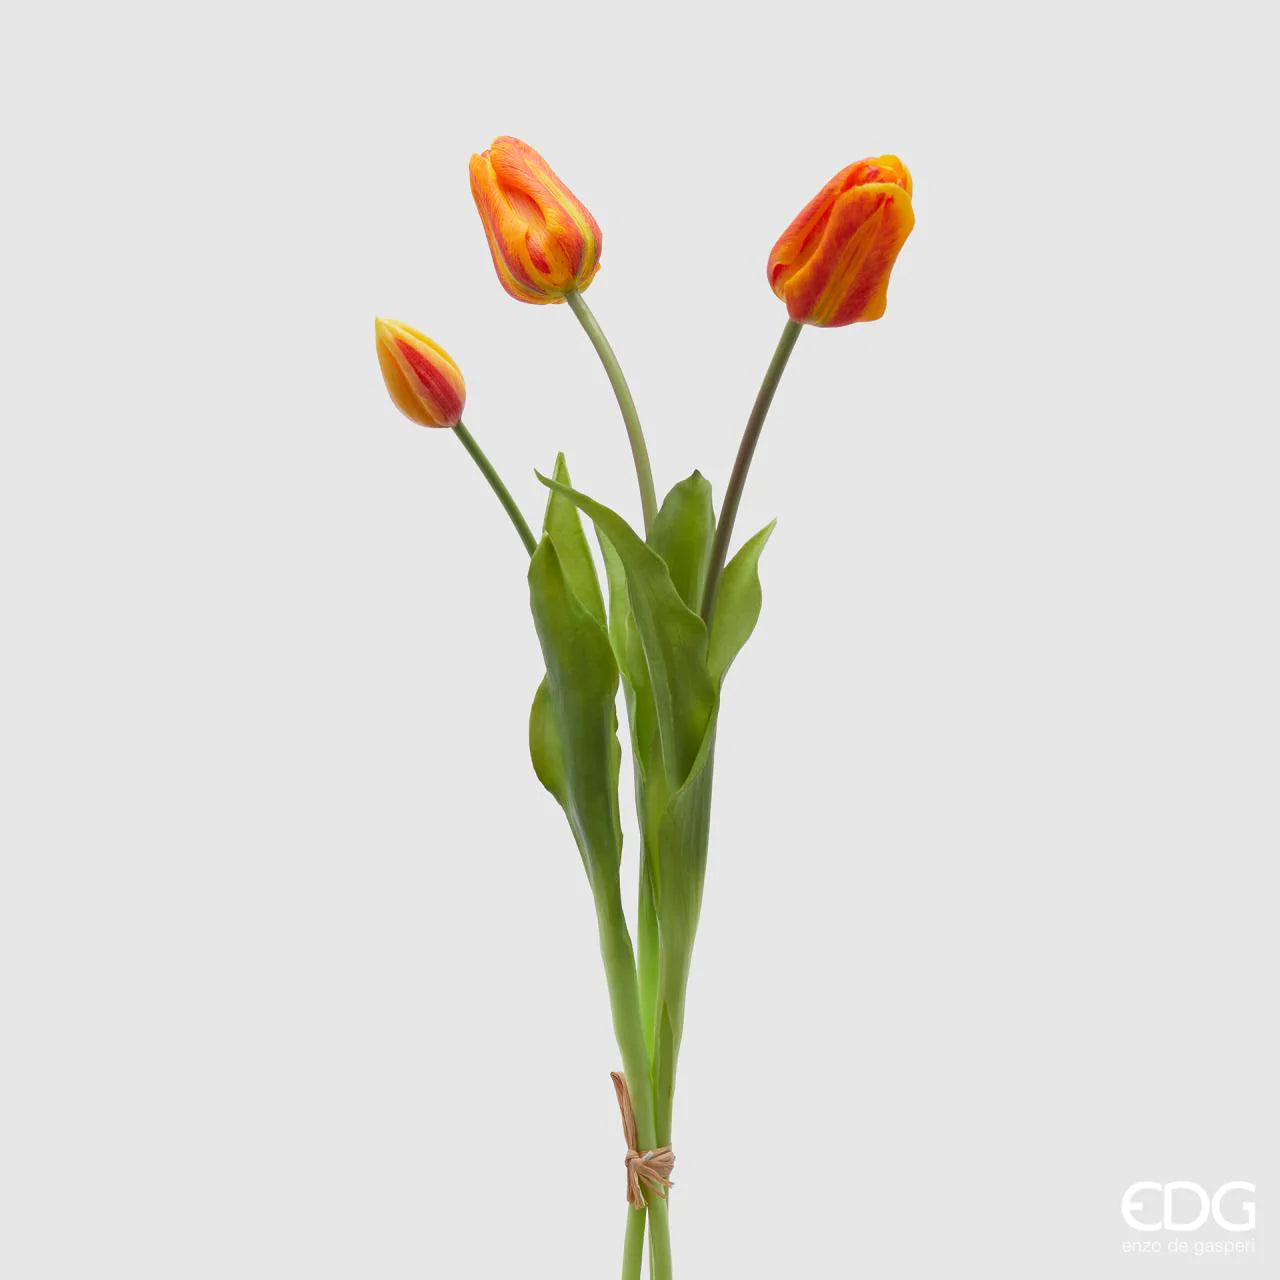 EDG - Mazzo Tulipani Olis 3 Fiori chiusi (Arancio)